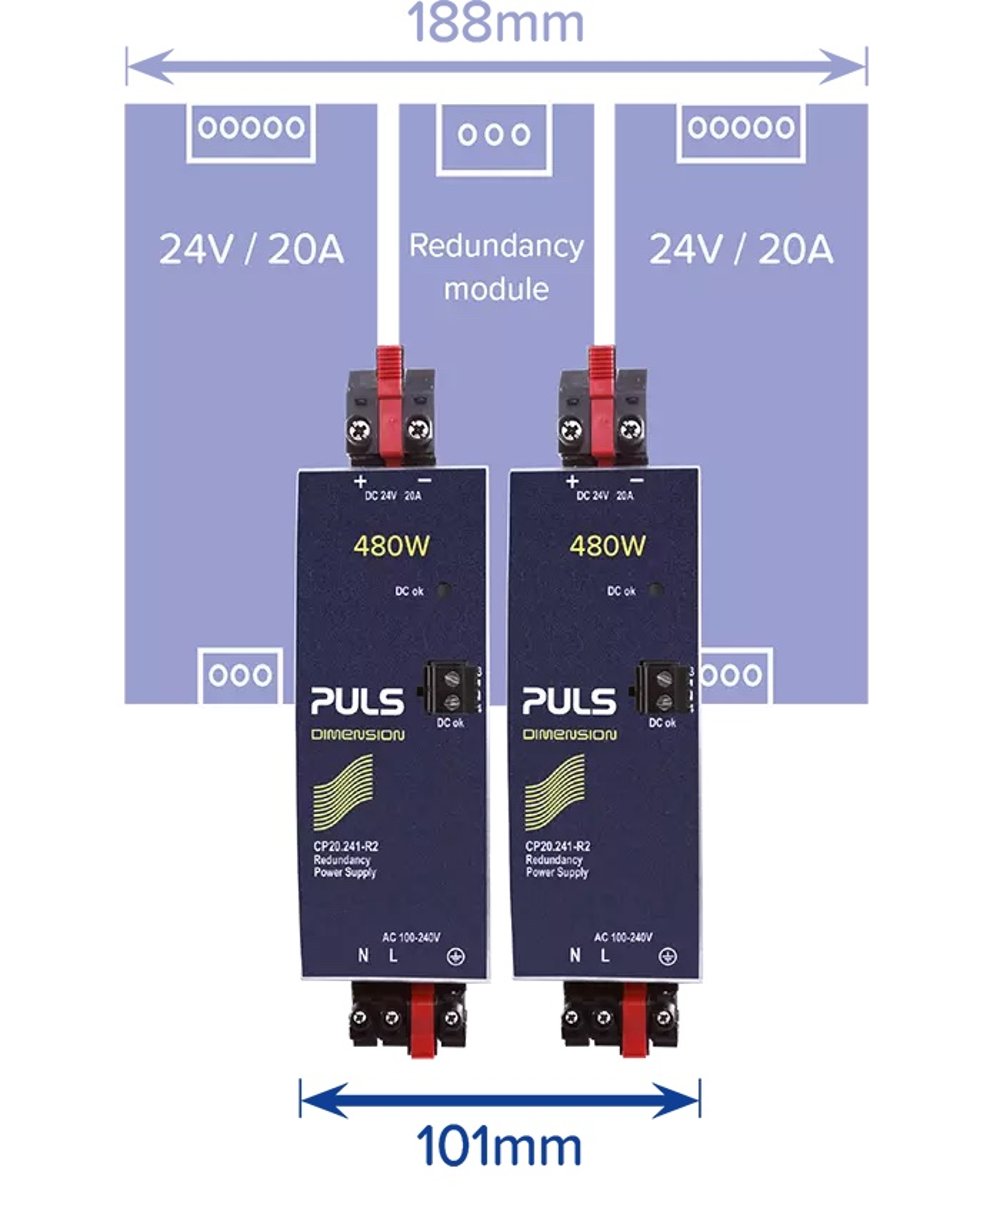 PULS Power Supplies w/ Integrated Redundancy